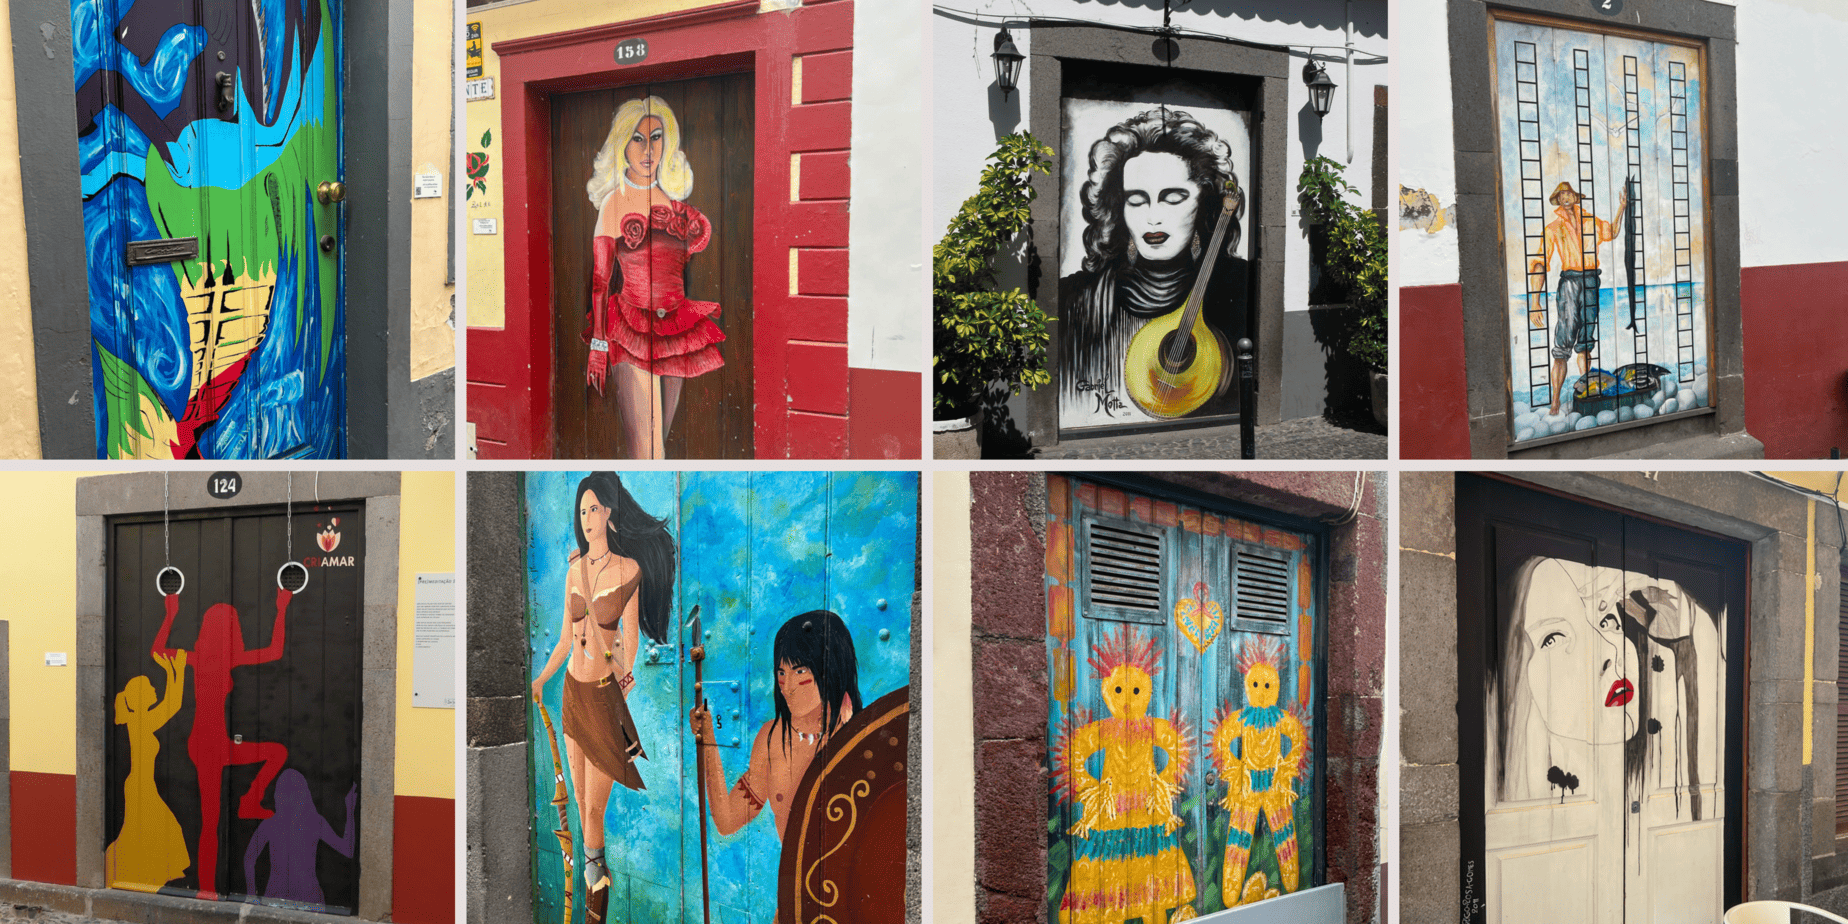 Collage of street art painted doors on Santa Maria Street Funchal (Madeira)